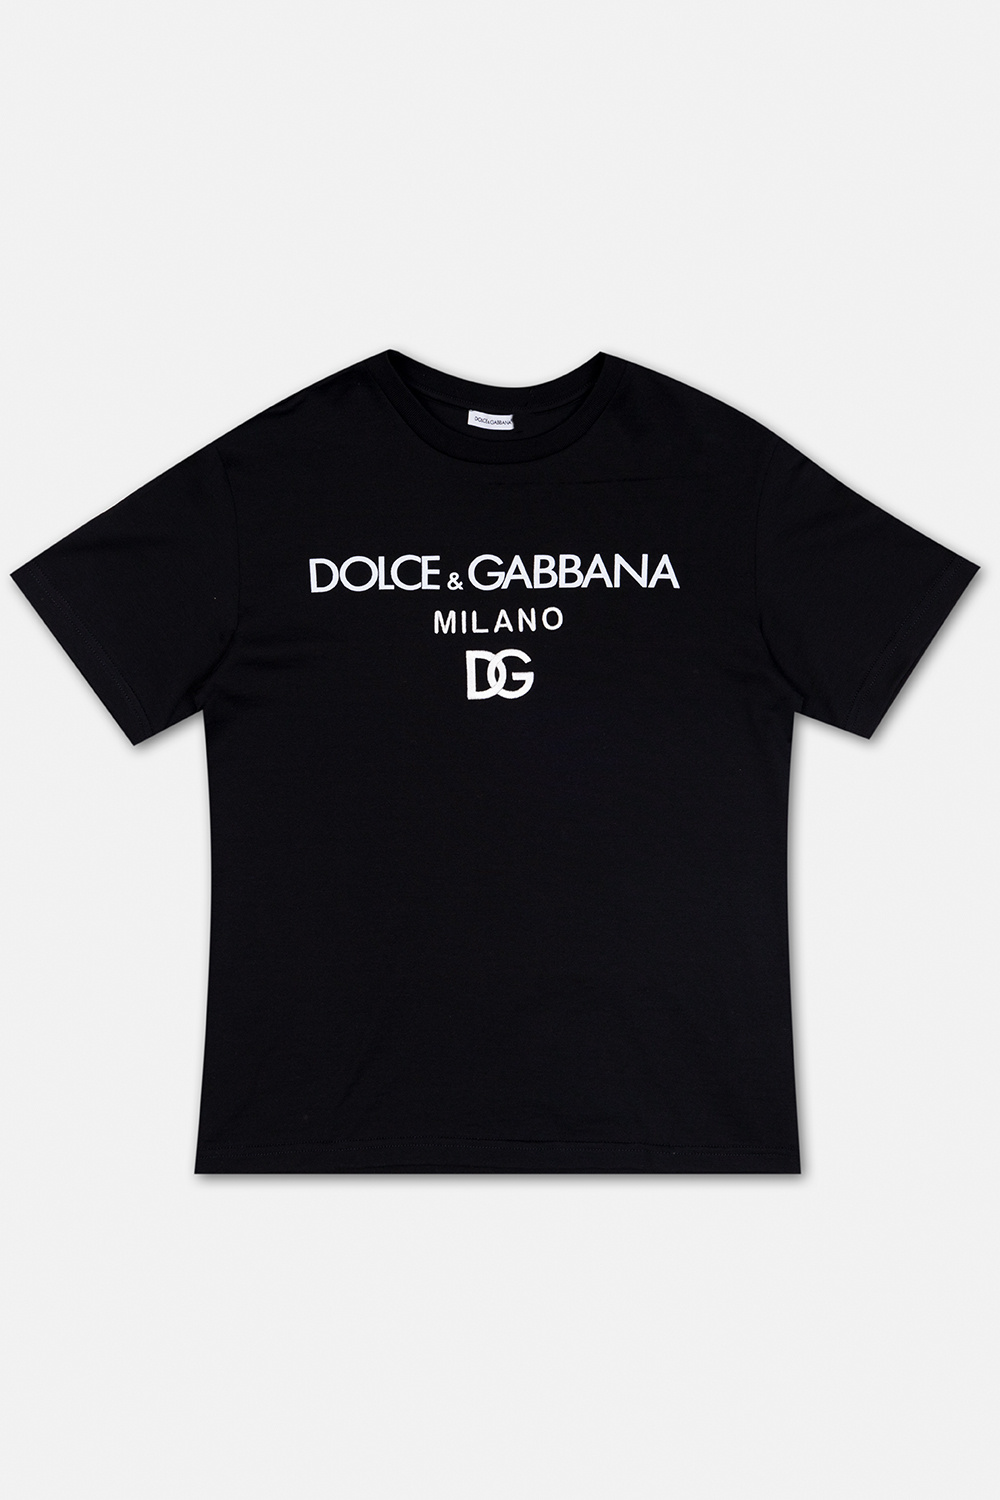 Dolce & Gabbana Kids embroidered logo longsleeved T-shirt White Dolce & Gabbana Miss Dolce Floral Raffia Satchel